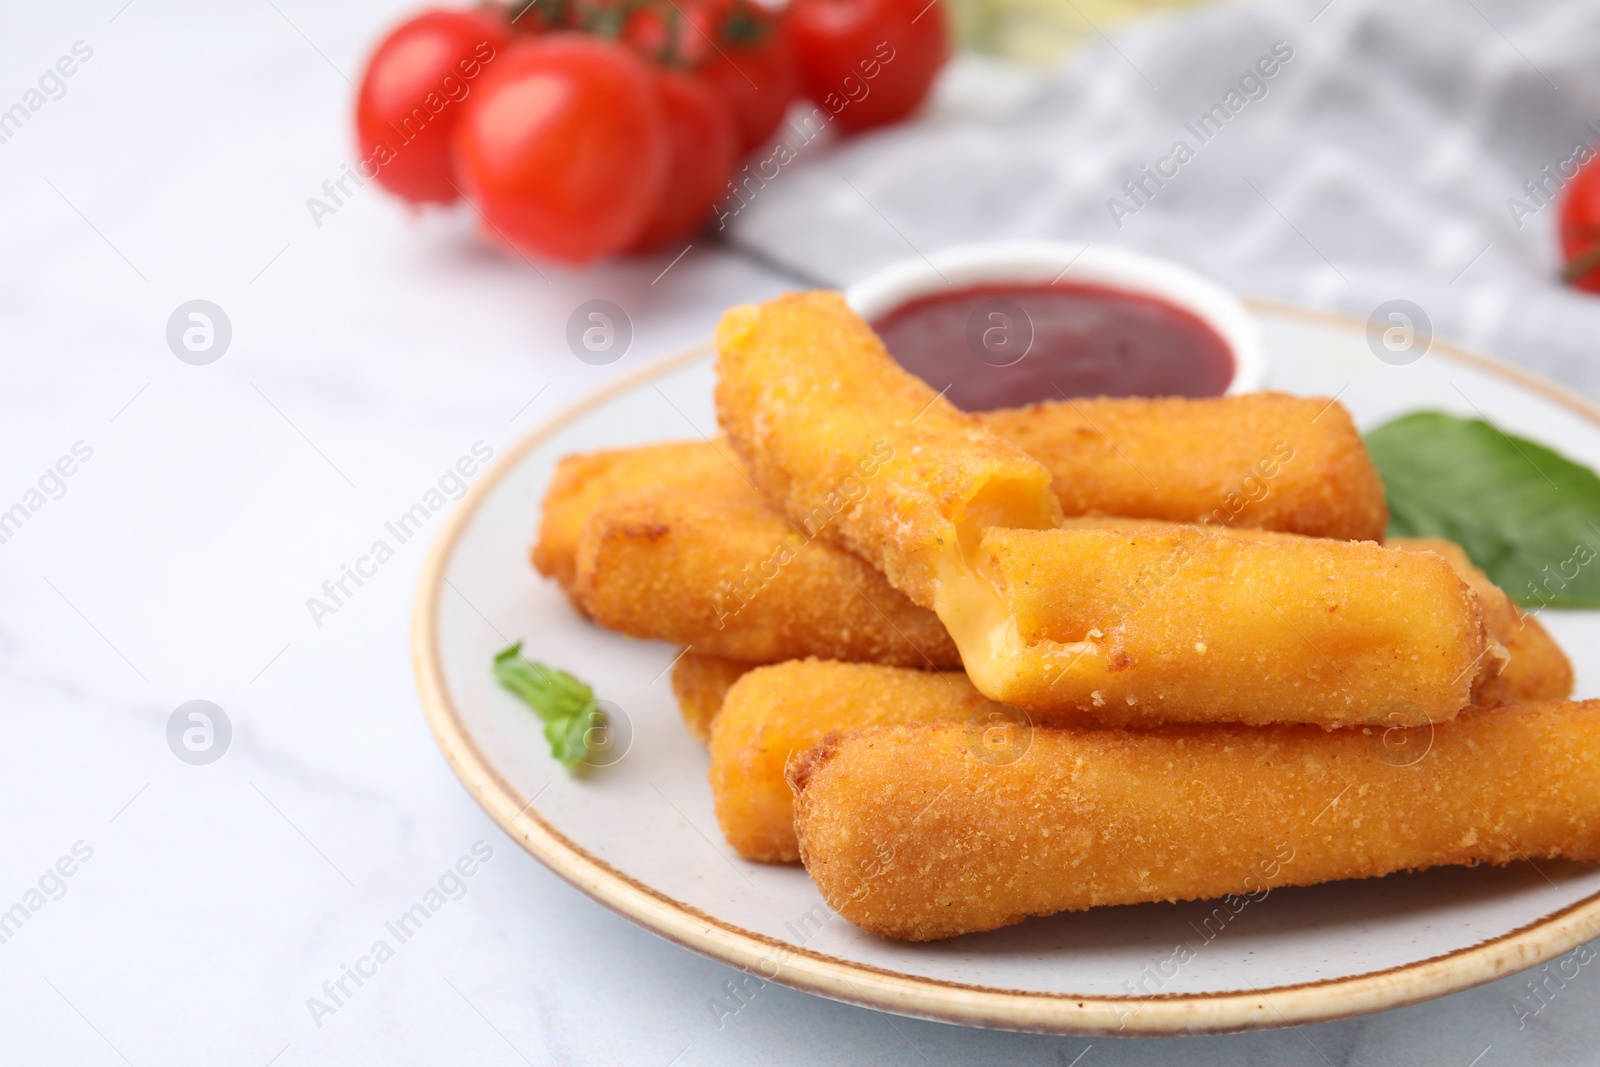 Photo of Tasty fried mozzarella sticks with tomato sauce on white table, space for text